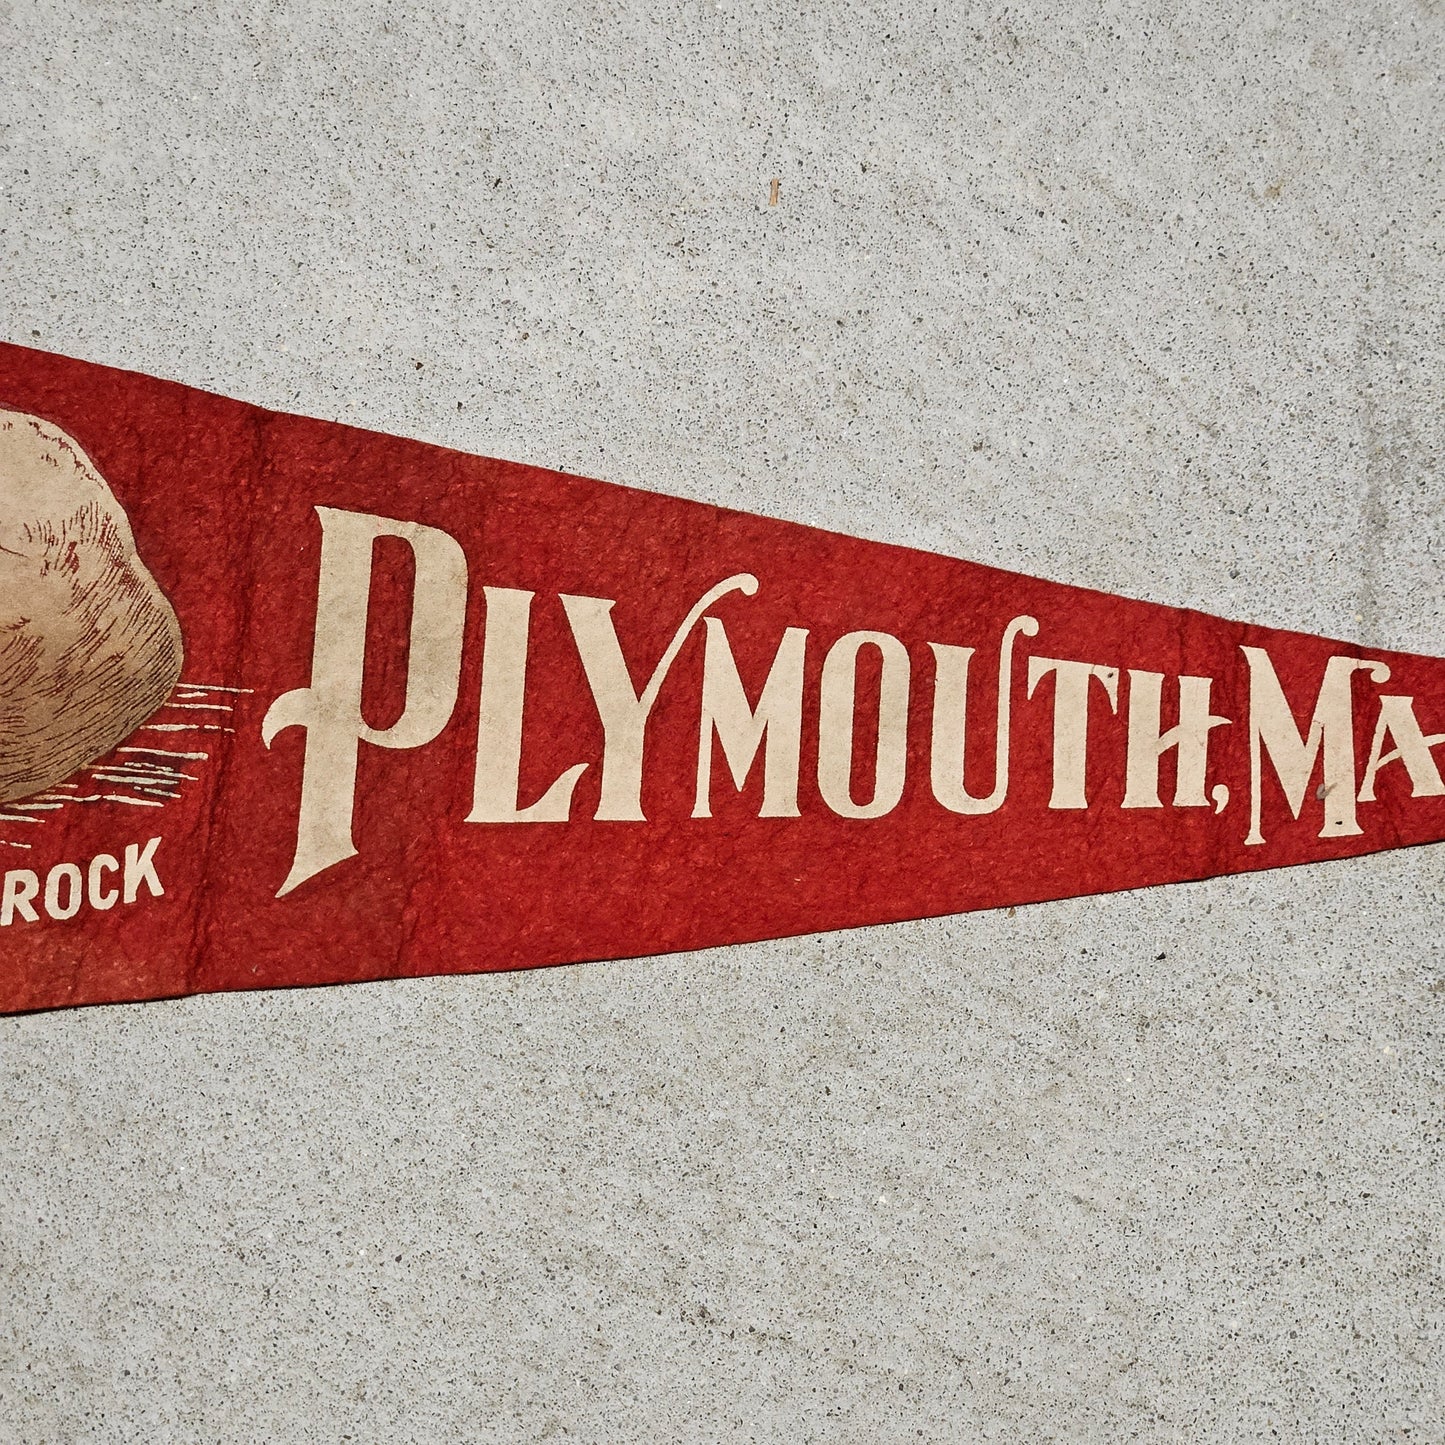 Vintage Plymouth Massachusetts Felt Pendant